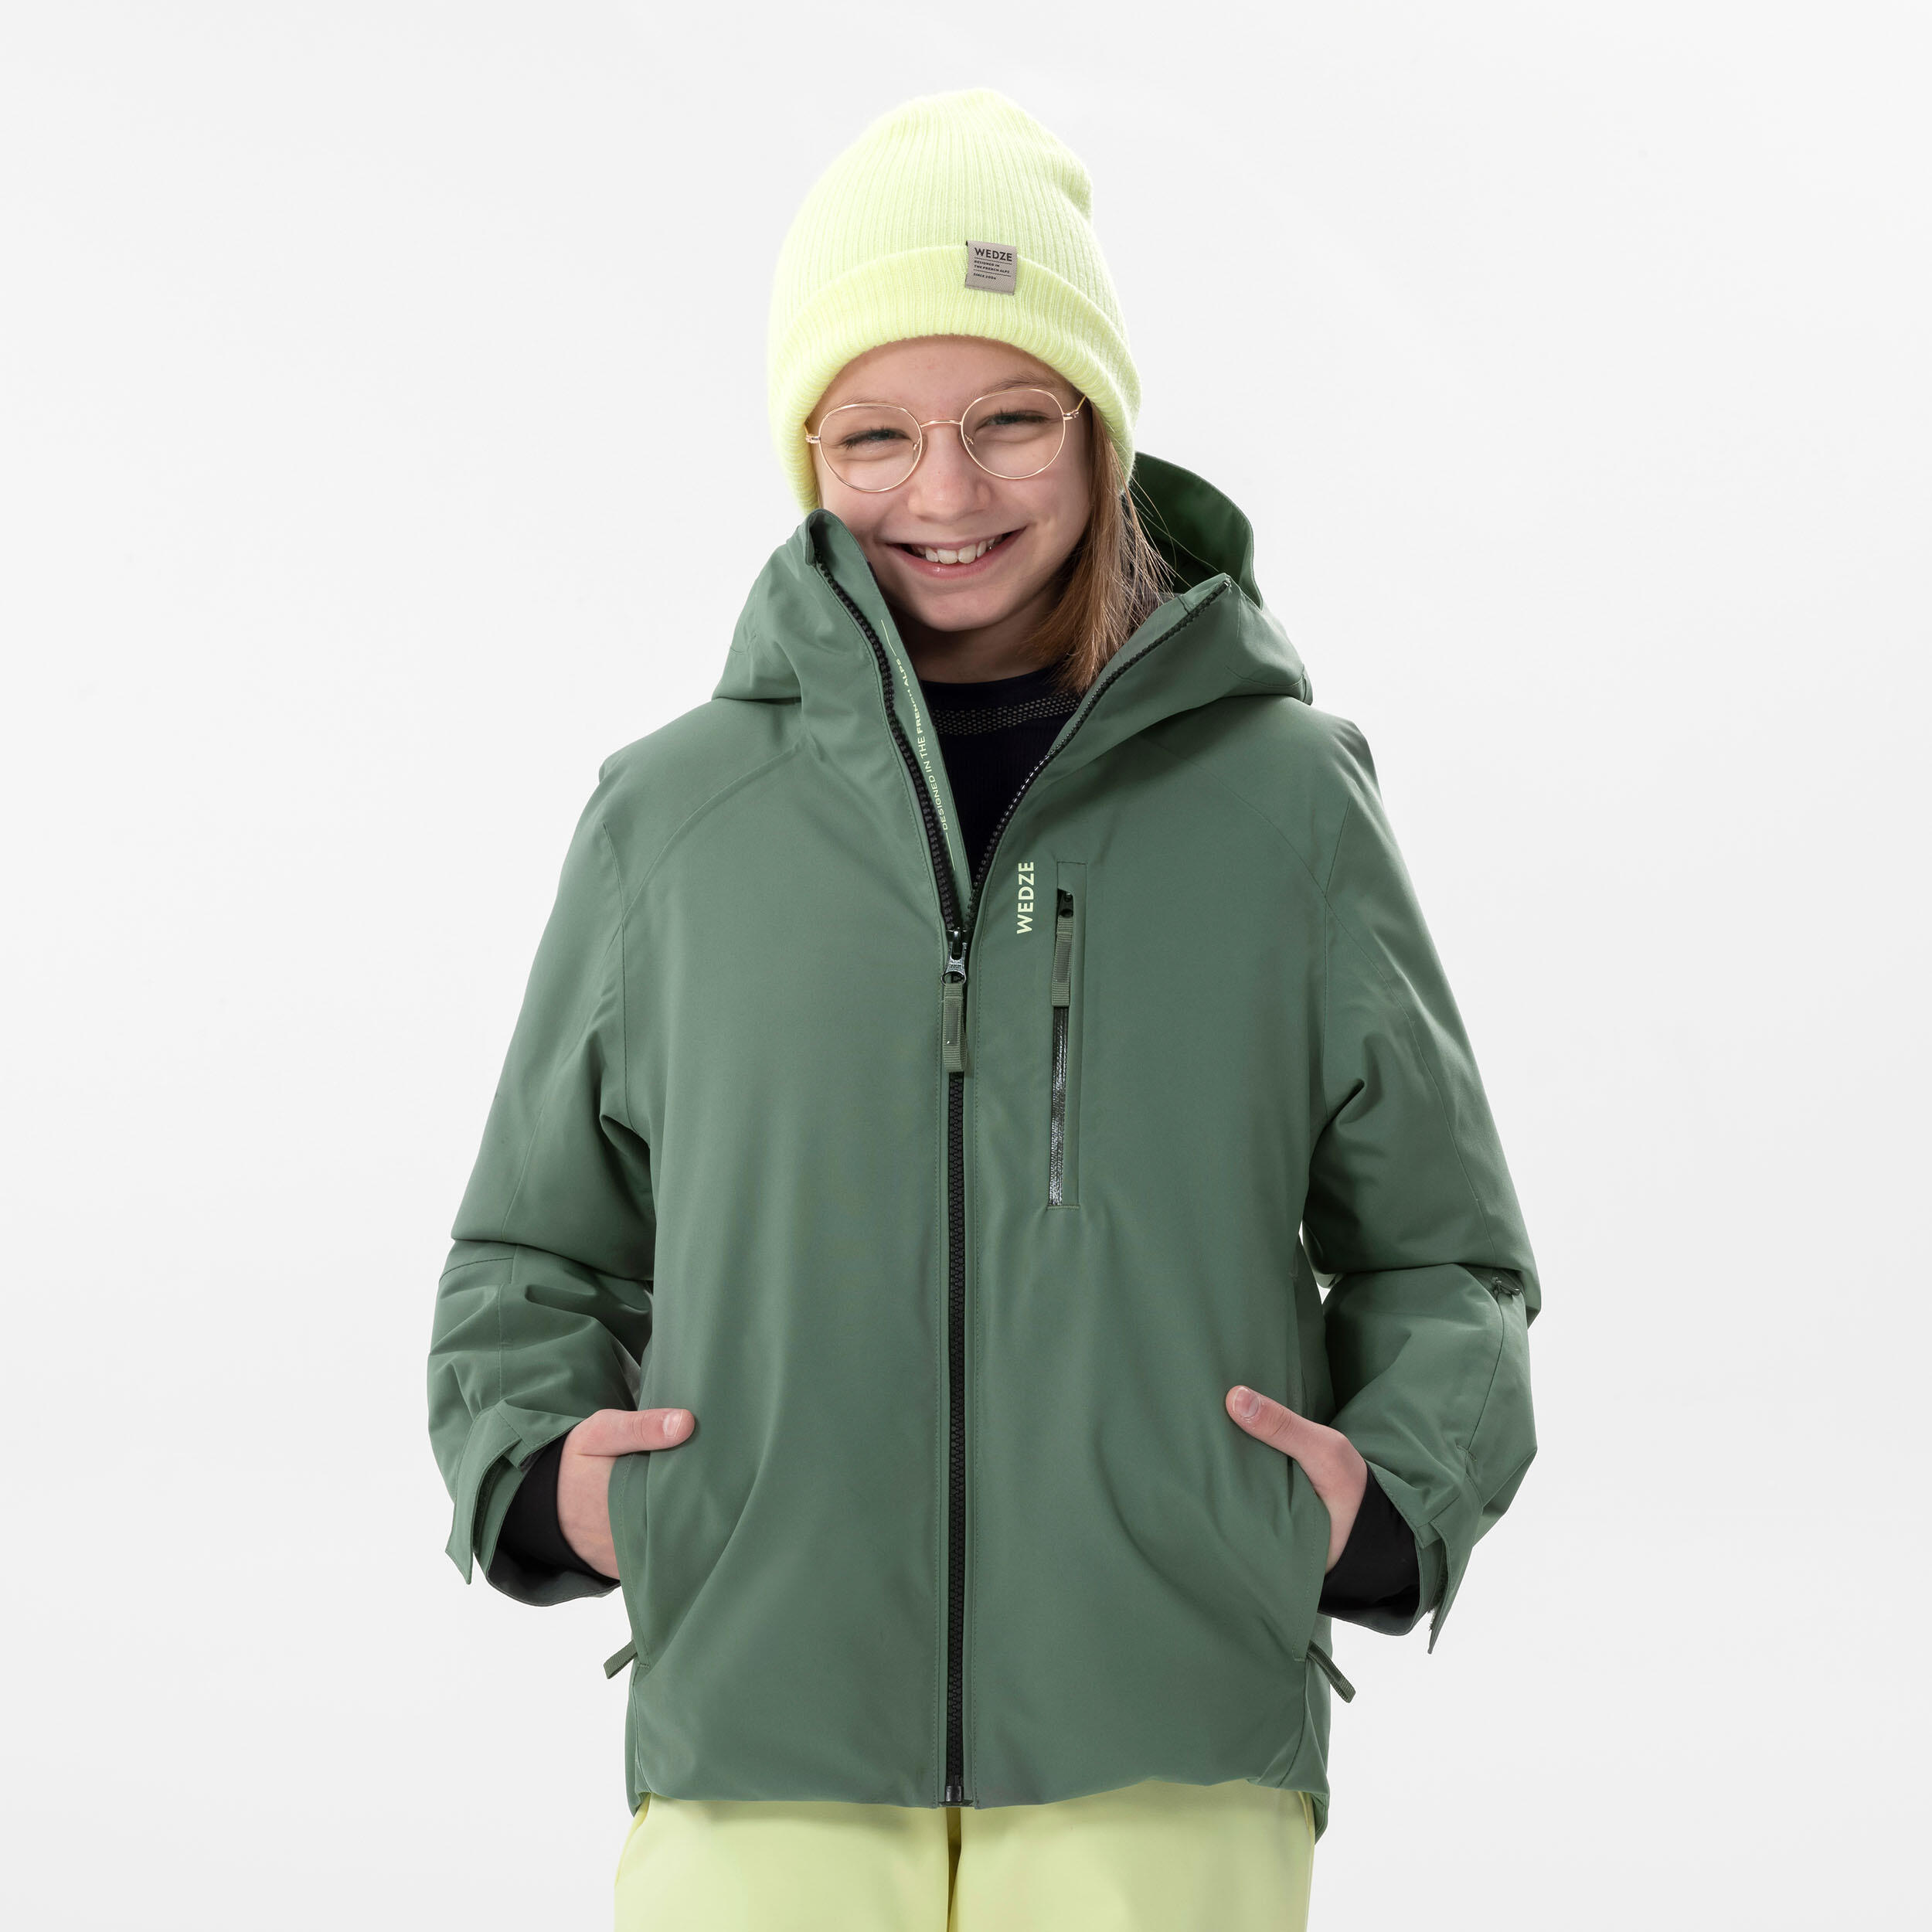 Kids Skiing Waterproof Winter Jacket 550 - Khaki